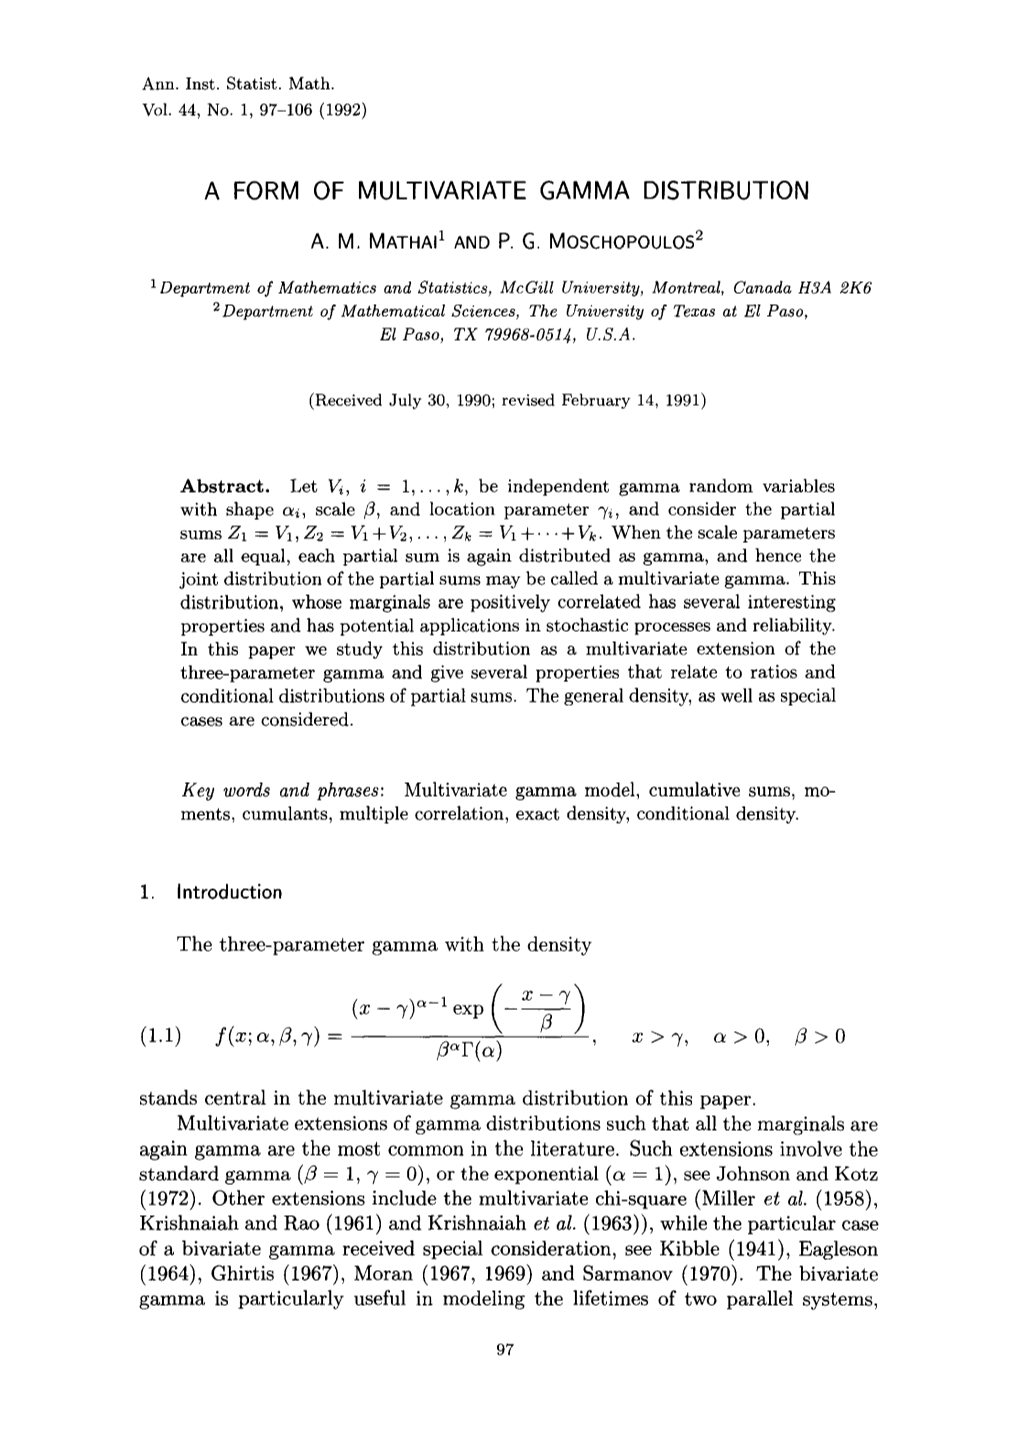 A Form of Multivariate Gamma Distribution